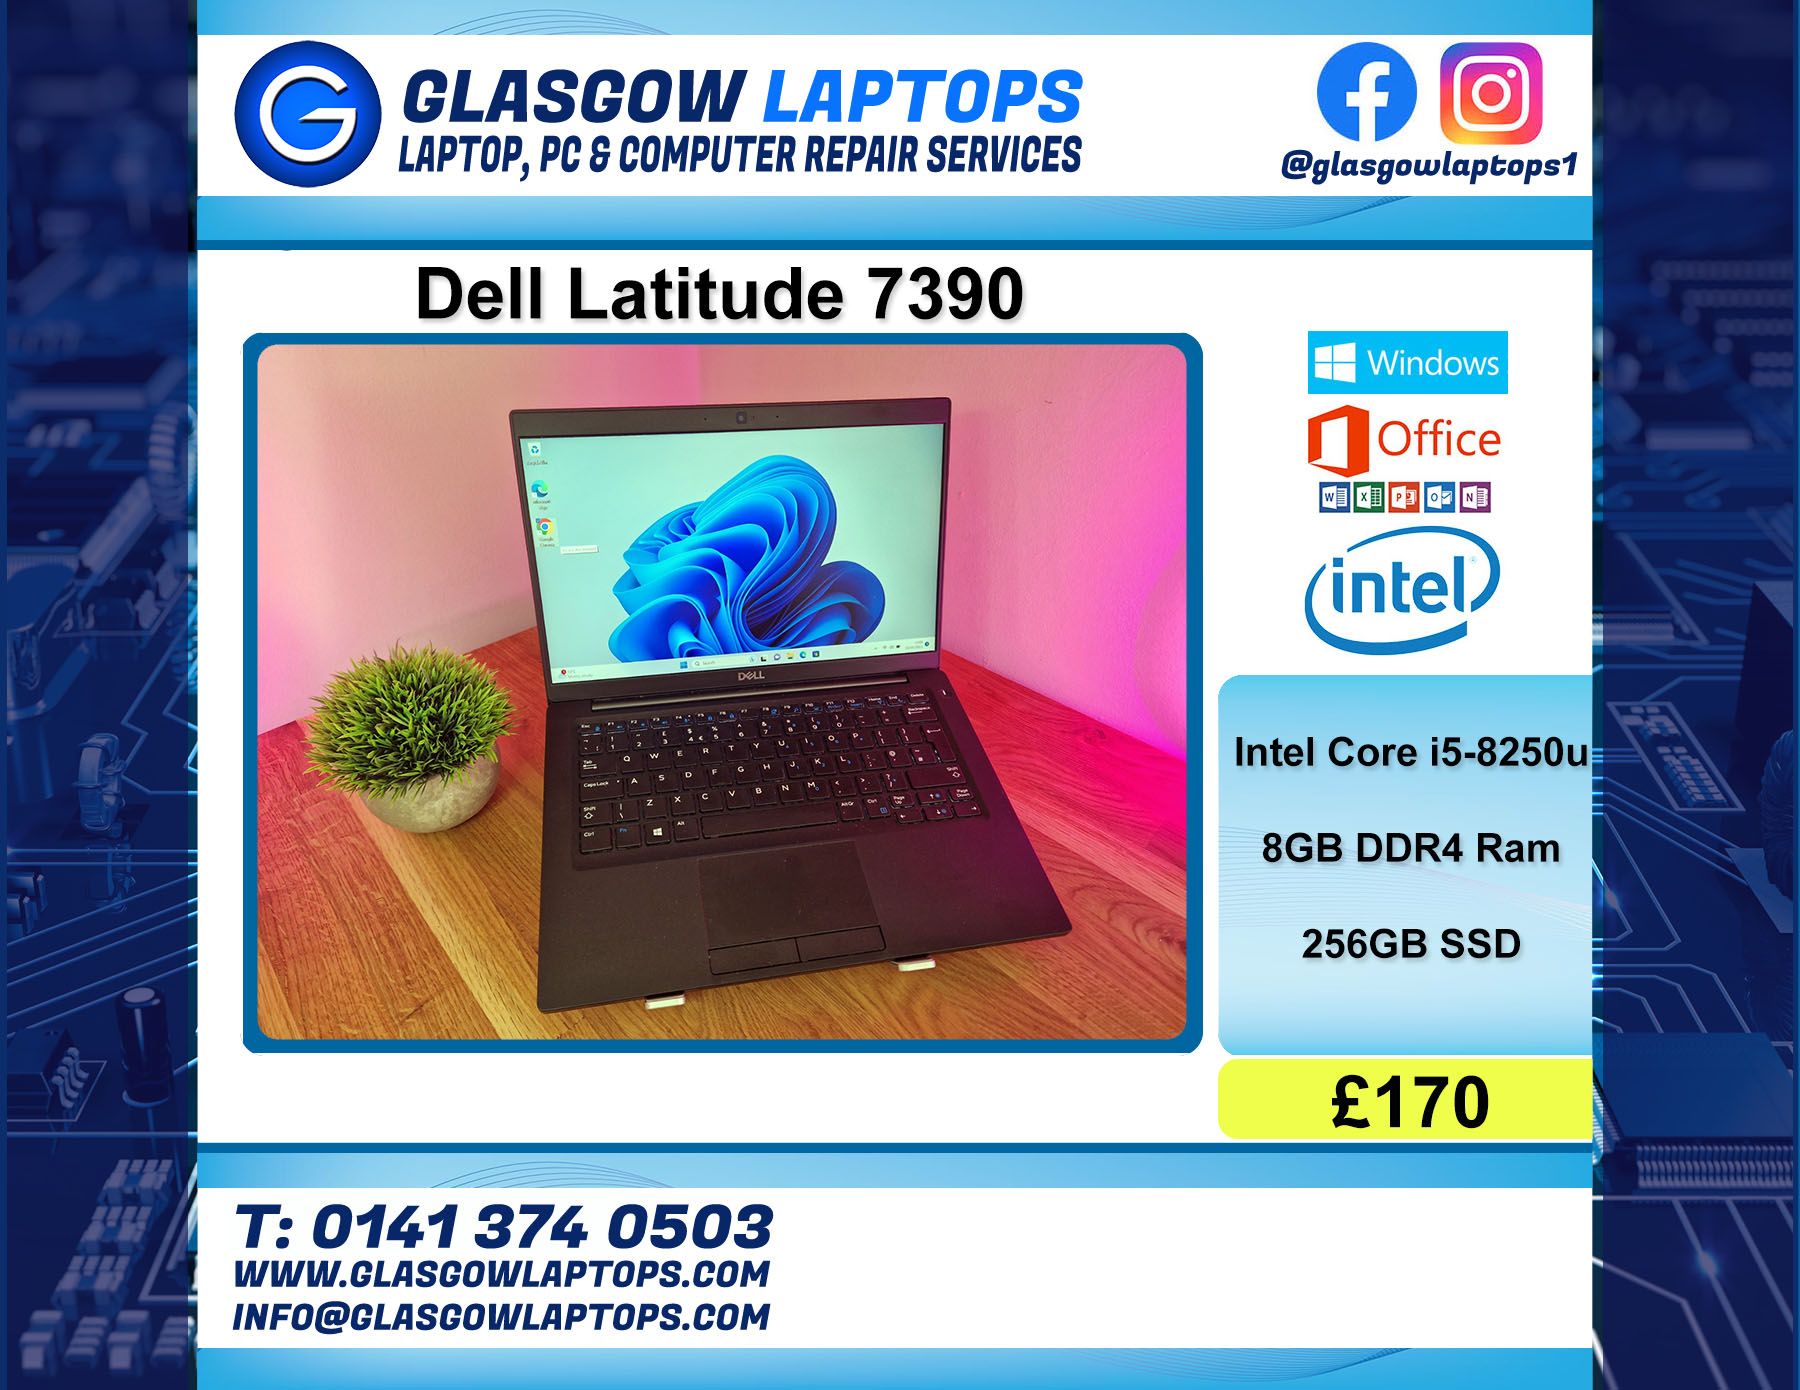 Refurbished Dell Laptops For Sale